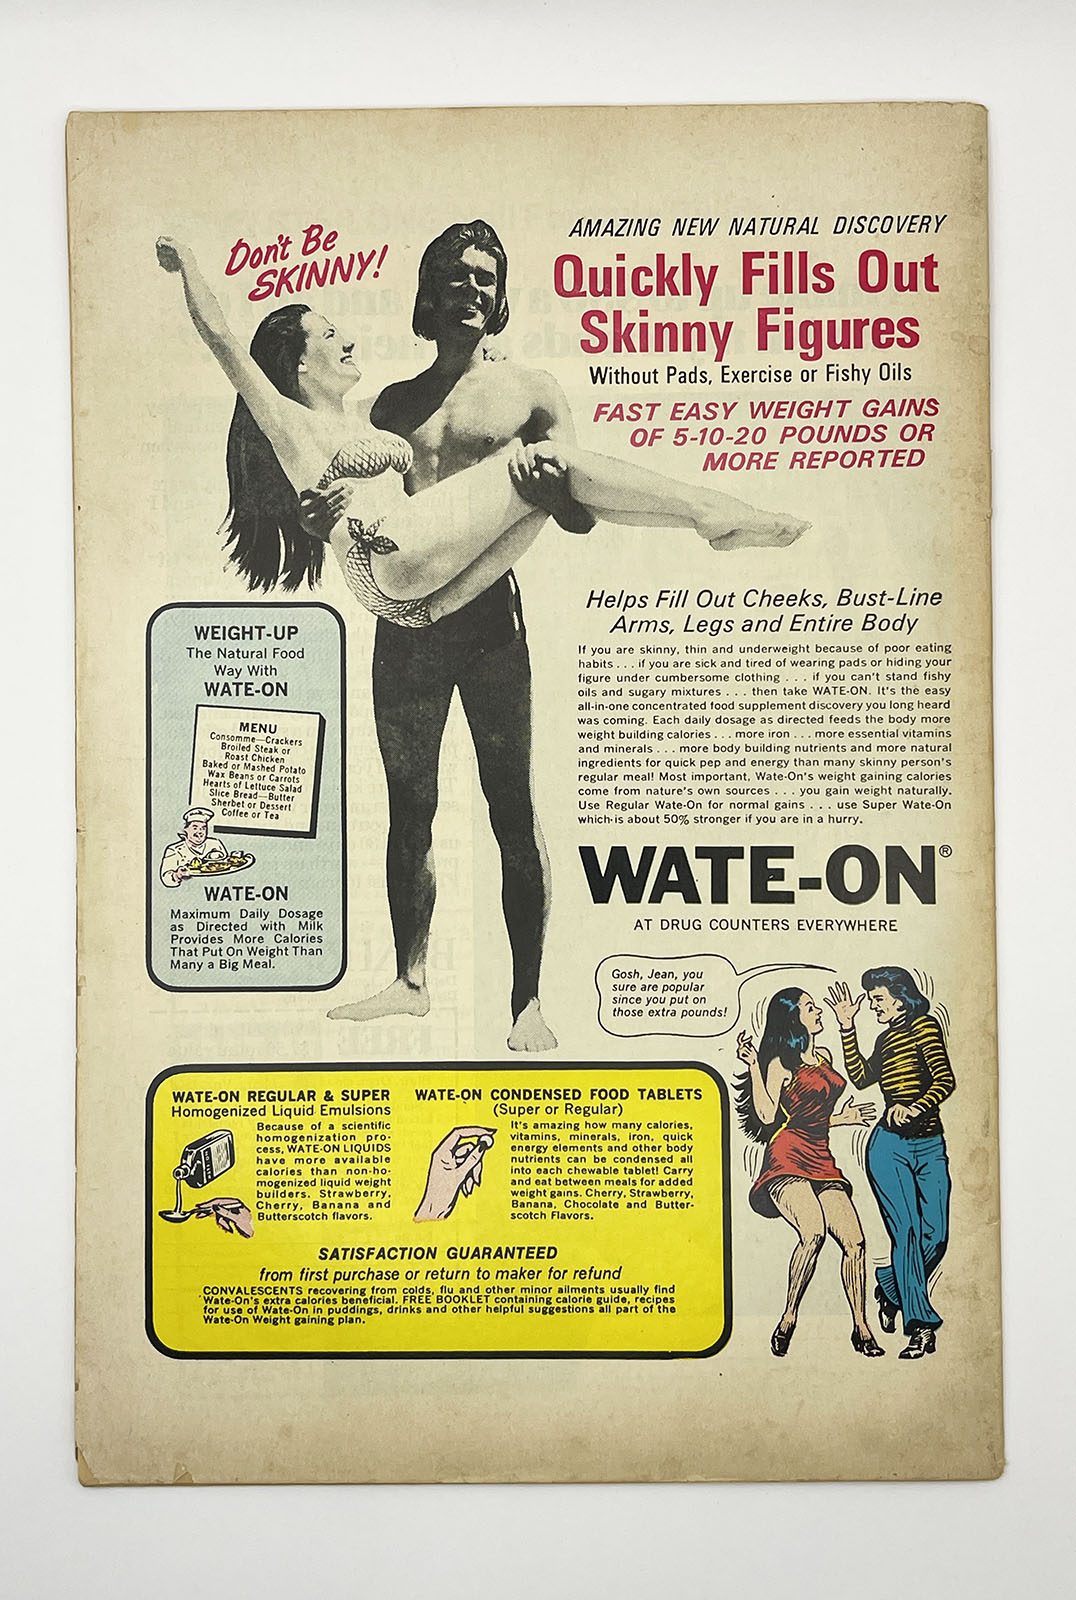 YOUNG LOVE #104 * 5.5 (VG/FN) * Neal Adams crying nun cover! DC Comics 1973